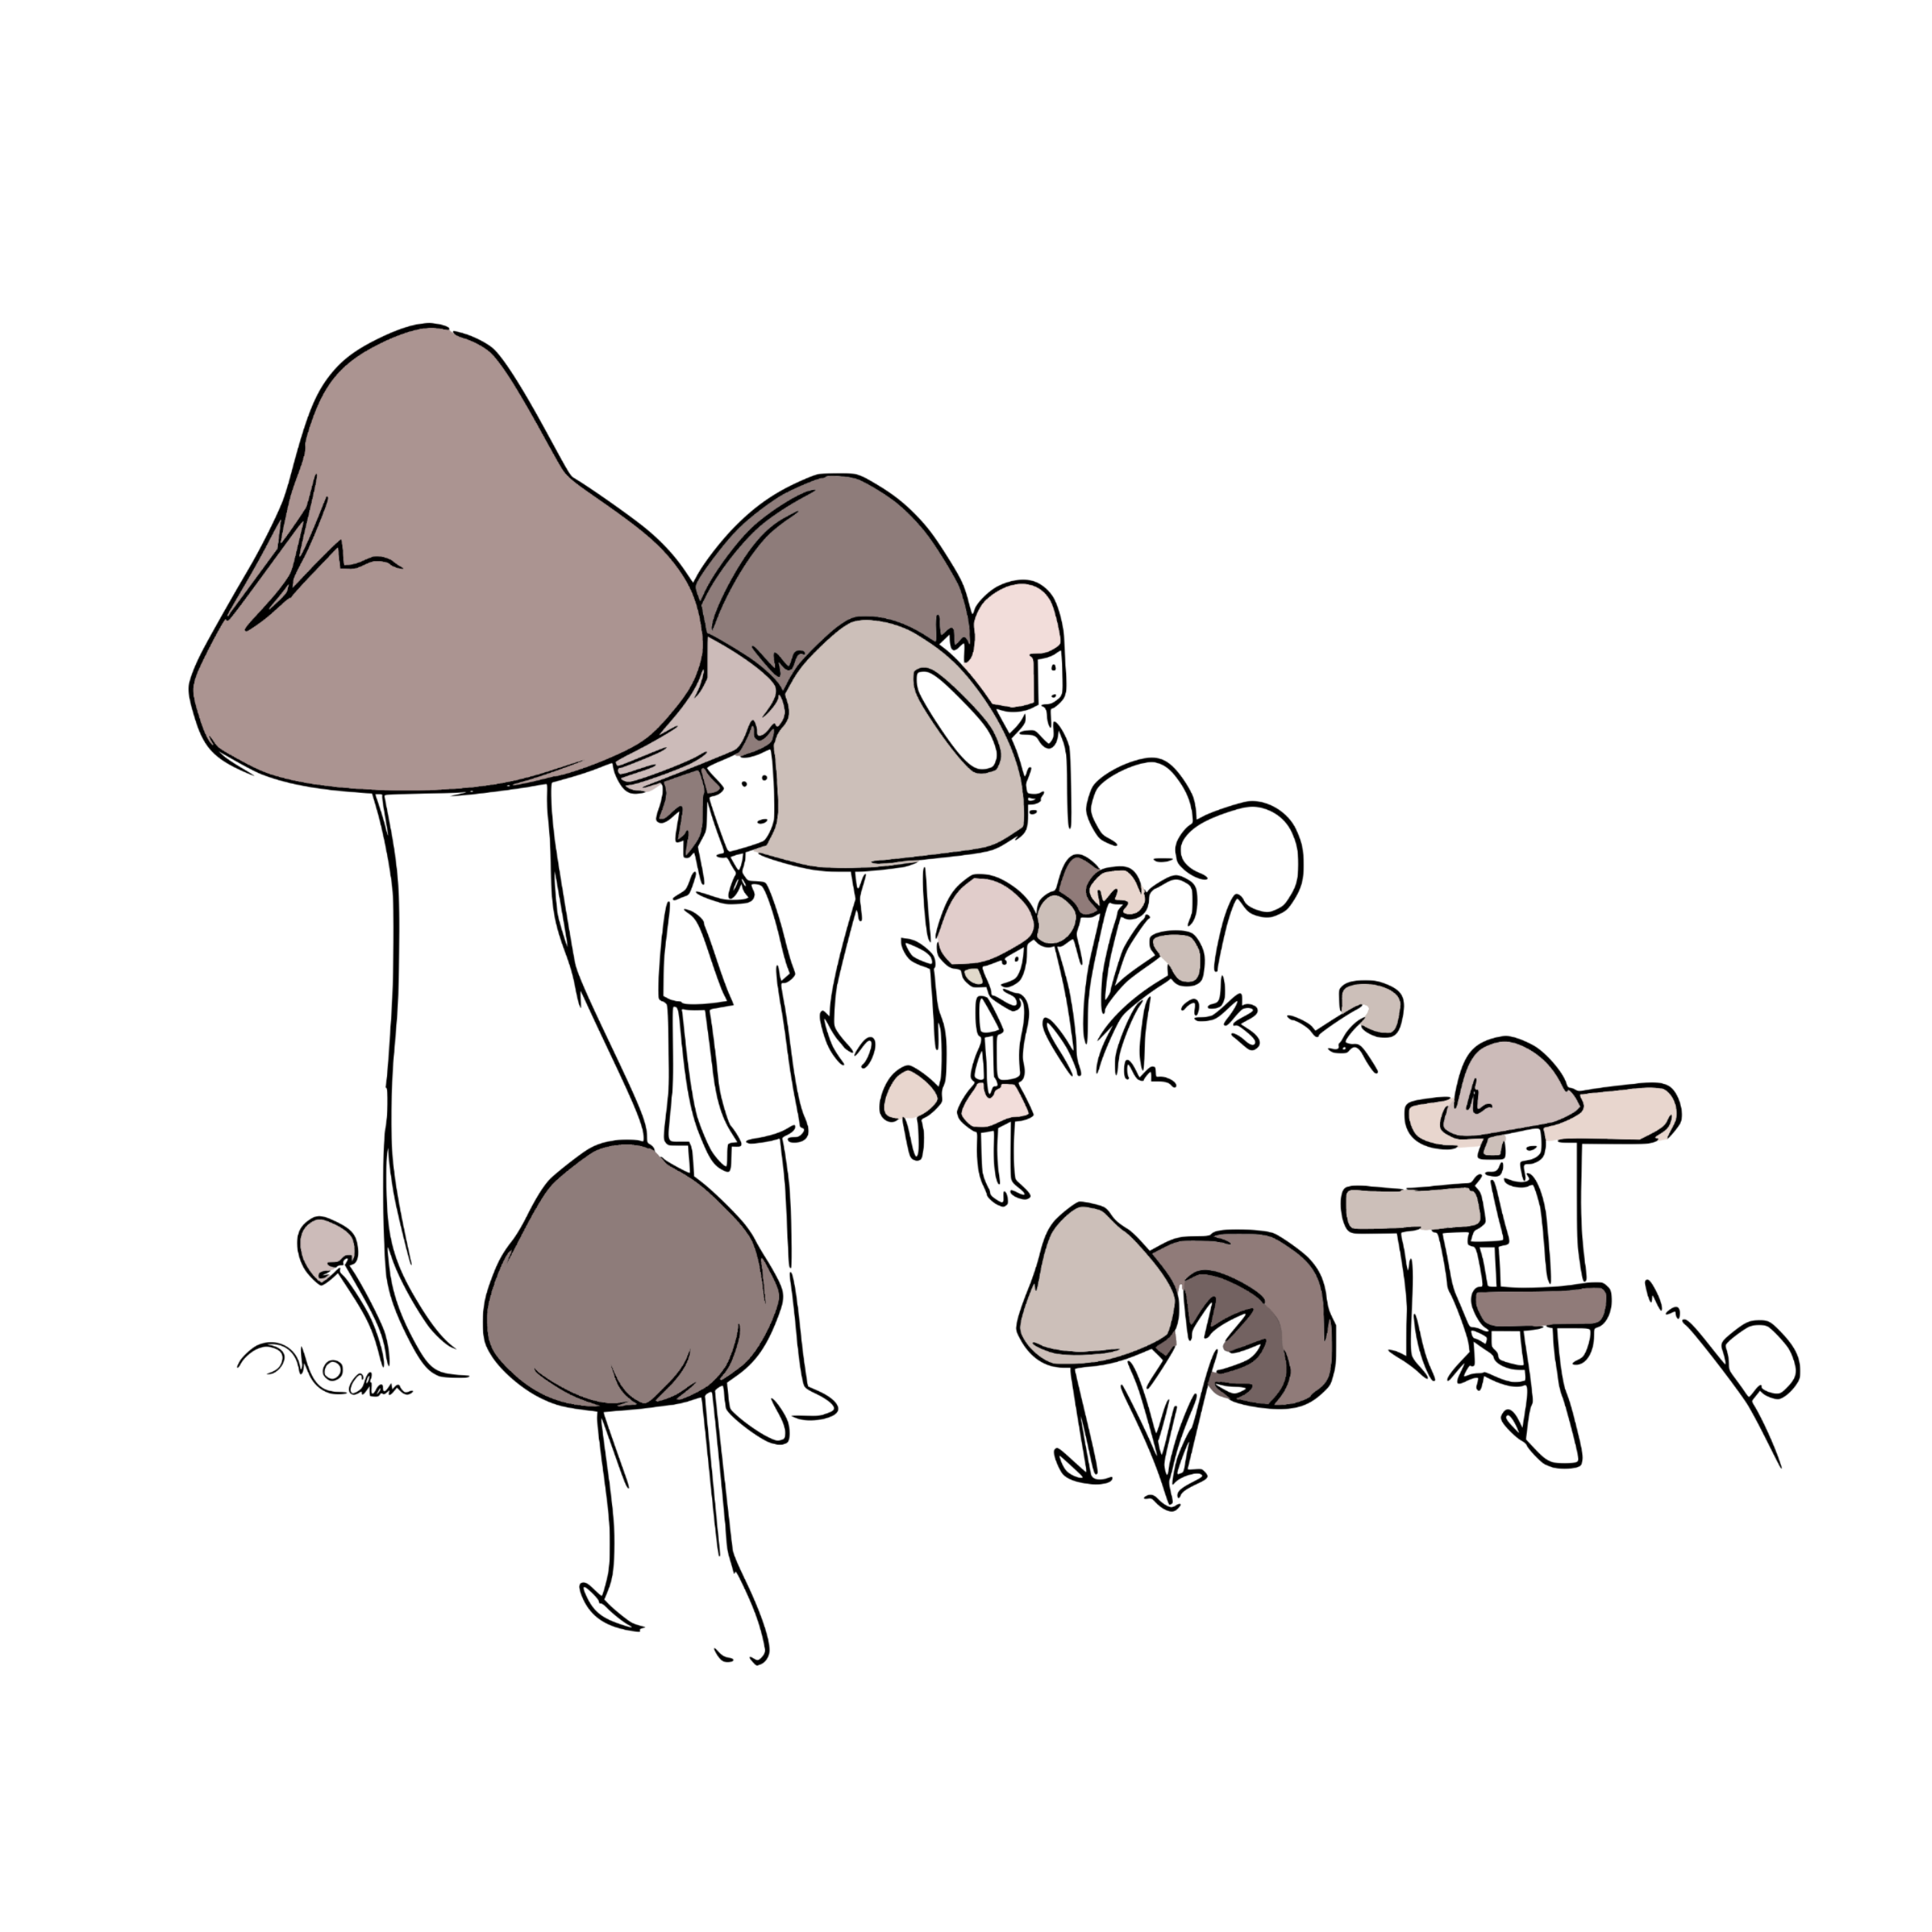 Mushroom dream art, mushroom children, surreal dream world art